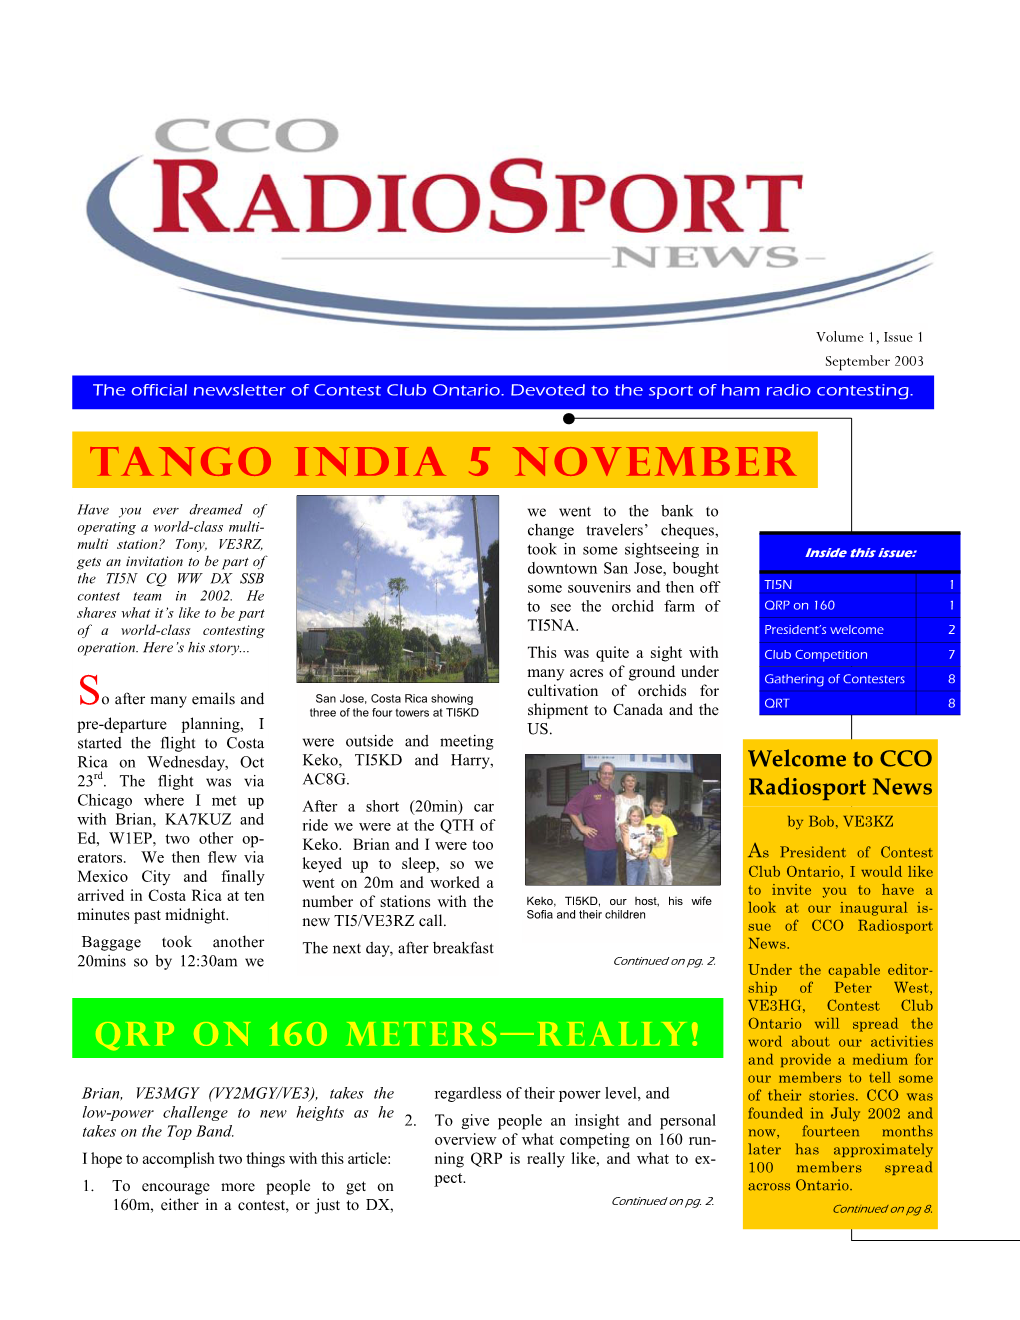 Tango India 5 November